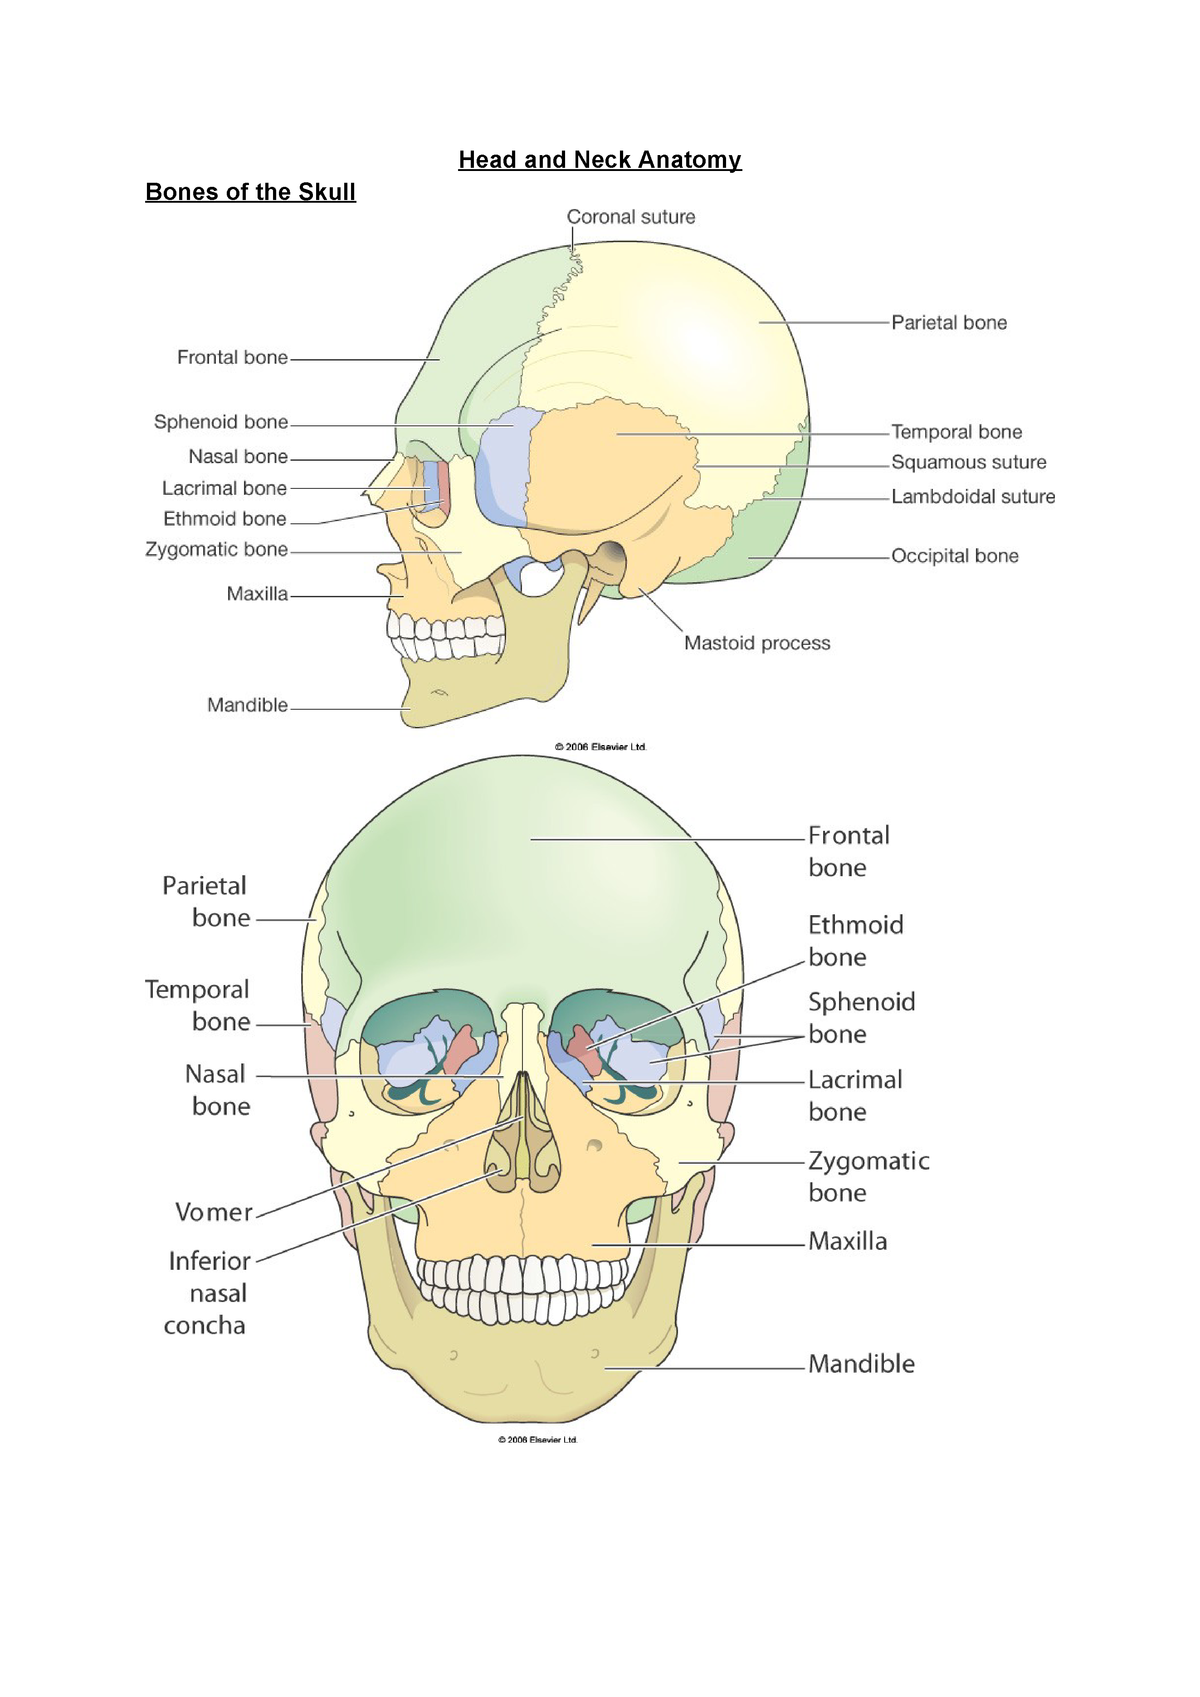 Head and Neck Anatomy - Medicine MBCH11002 - Edin - StuDocu